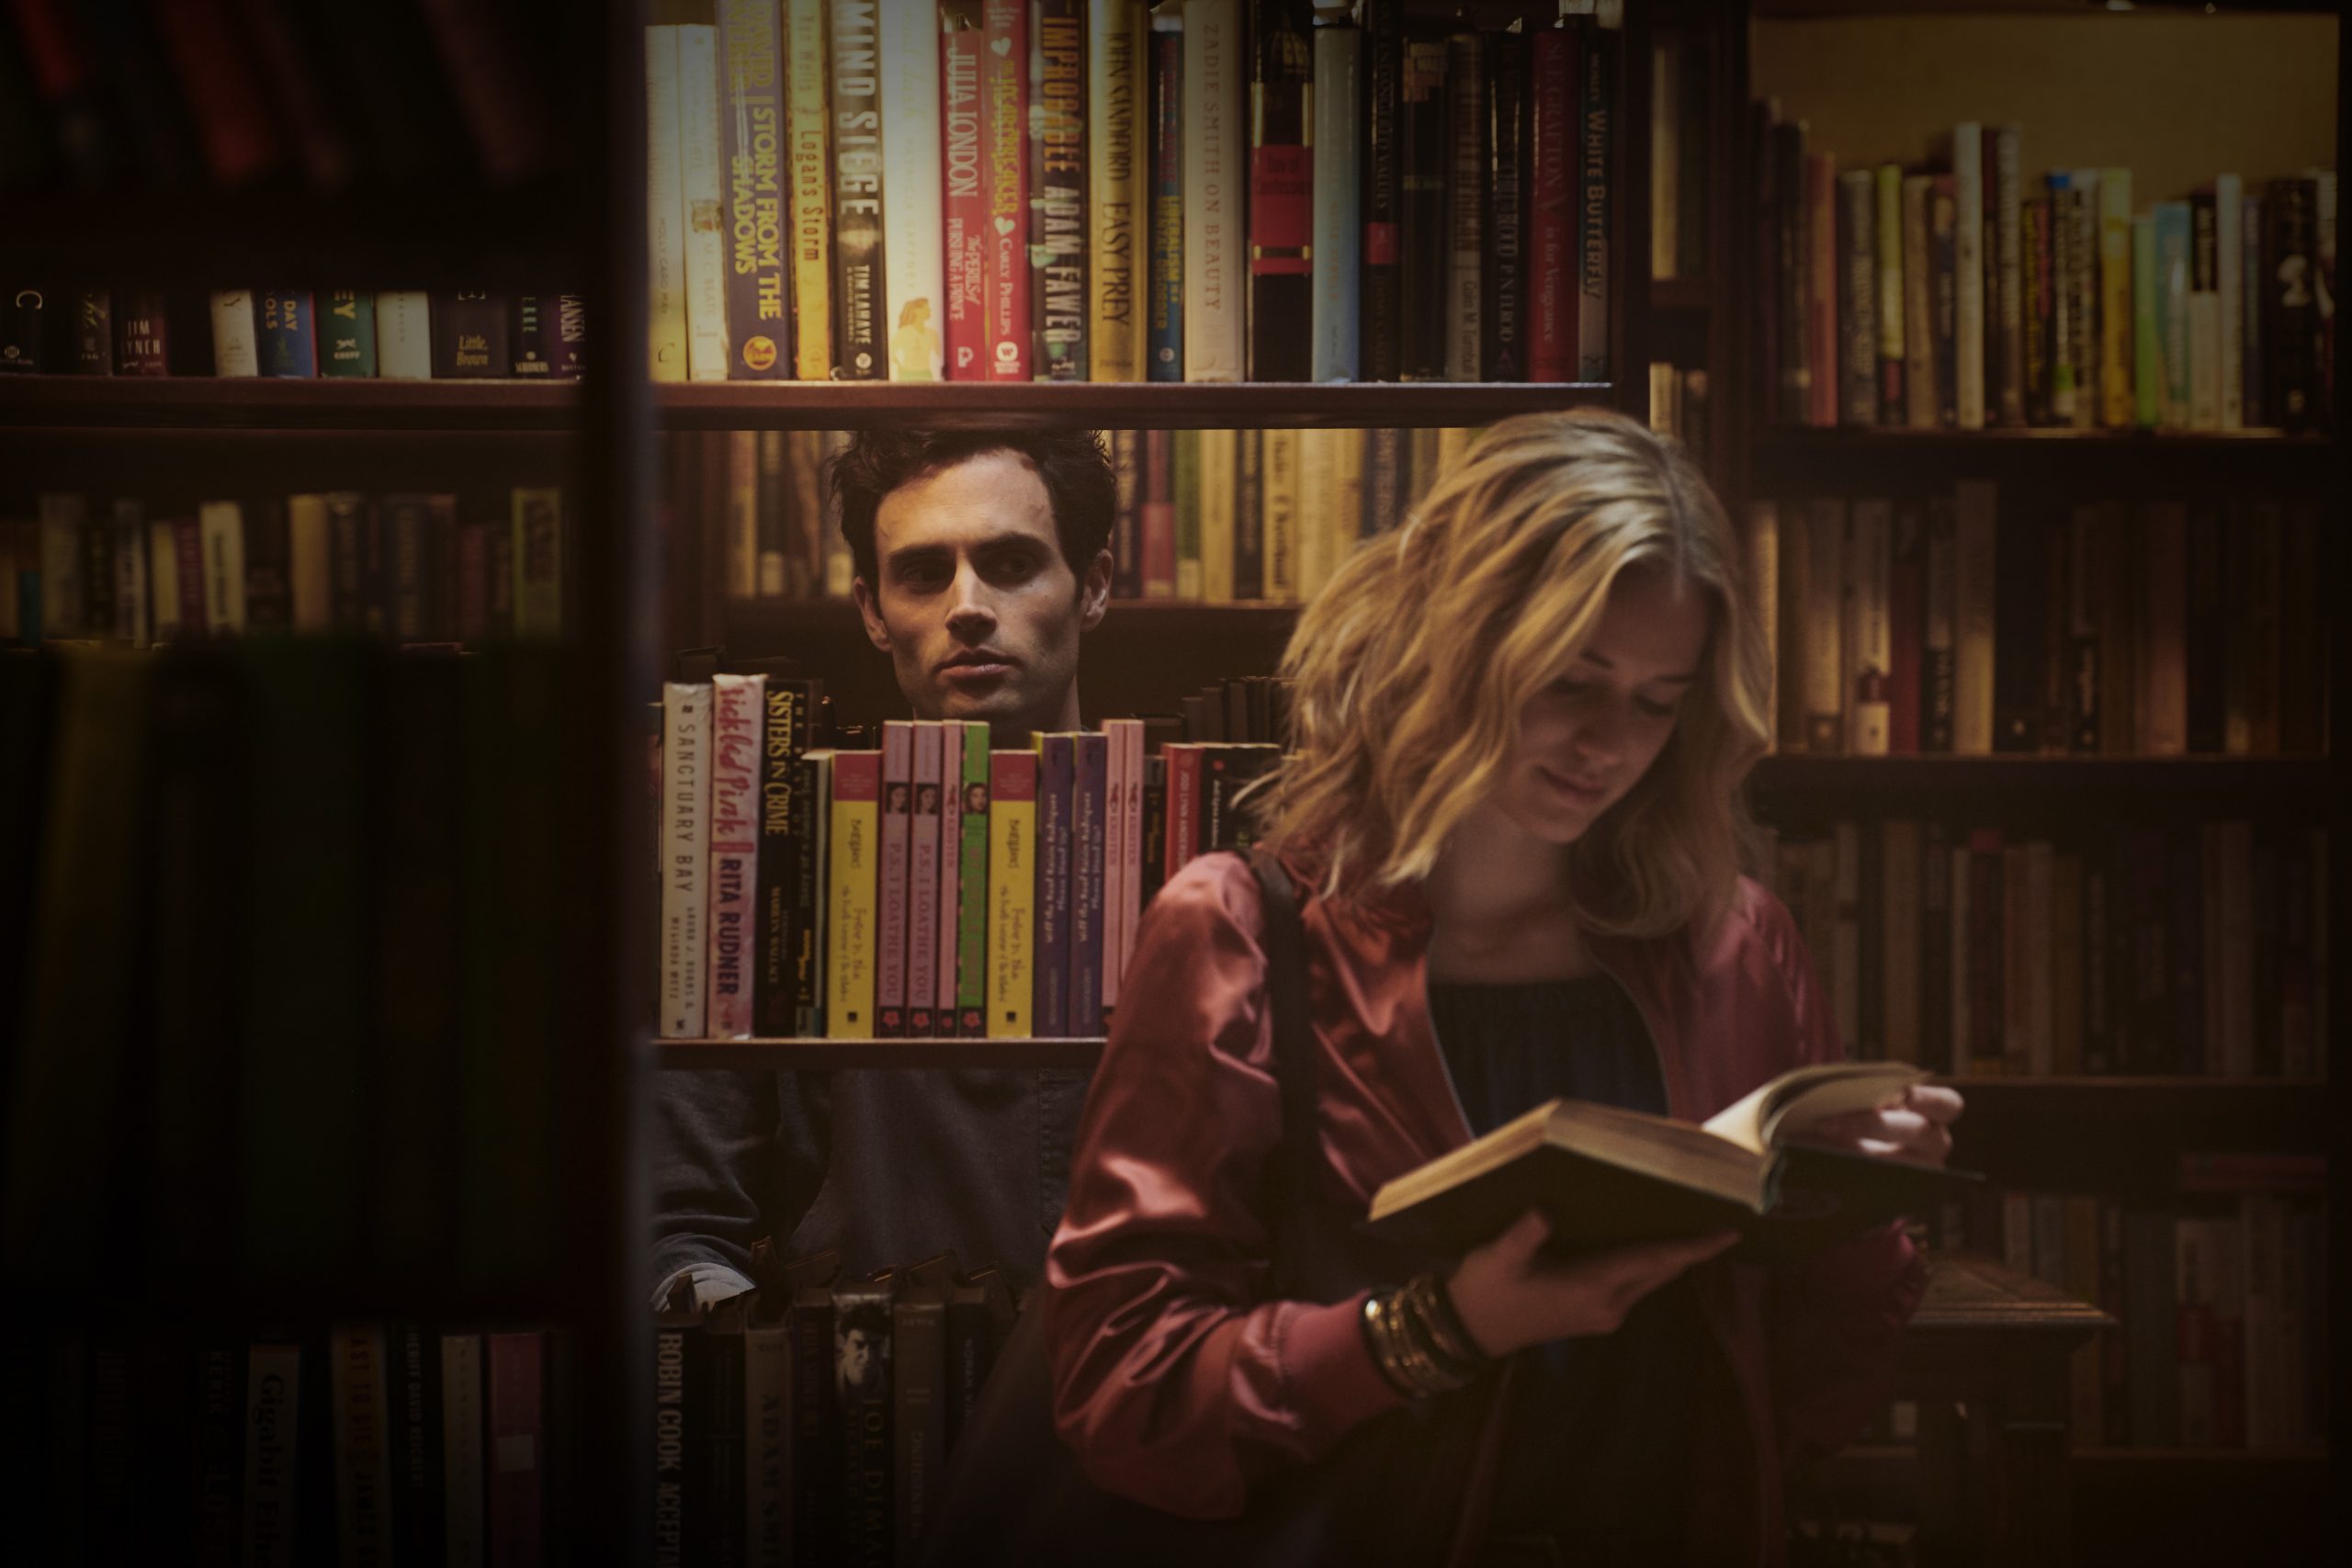 Joe Goldberg stares through a bookshelf at Guinevere Beck reading a book.